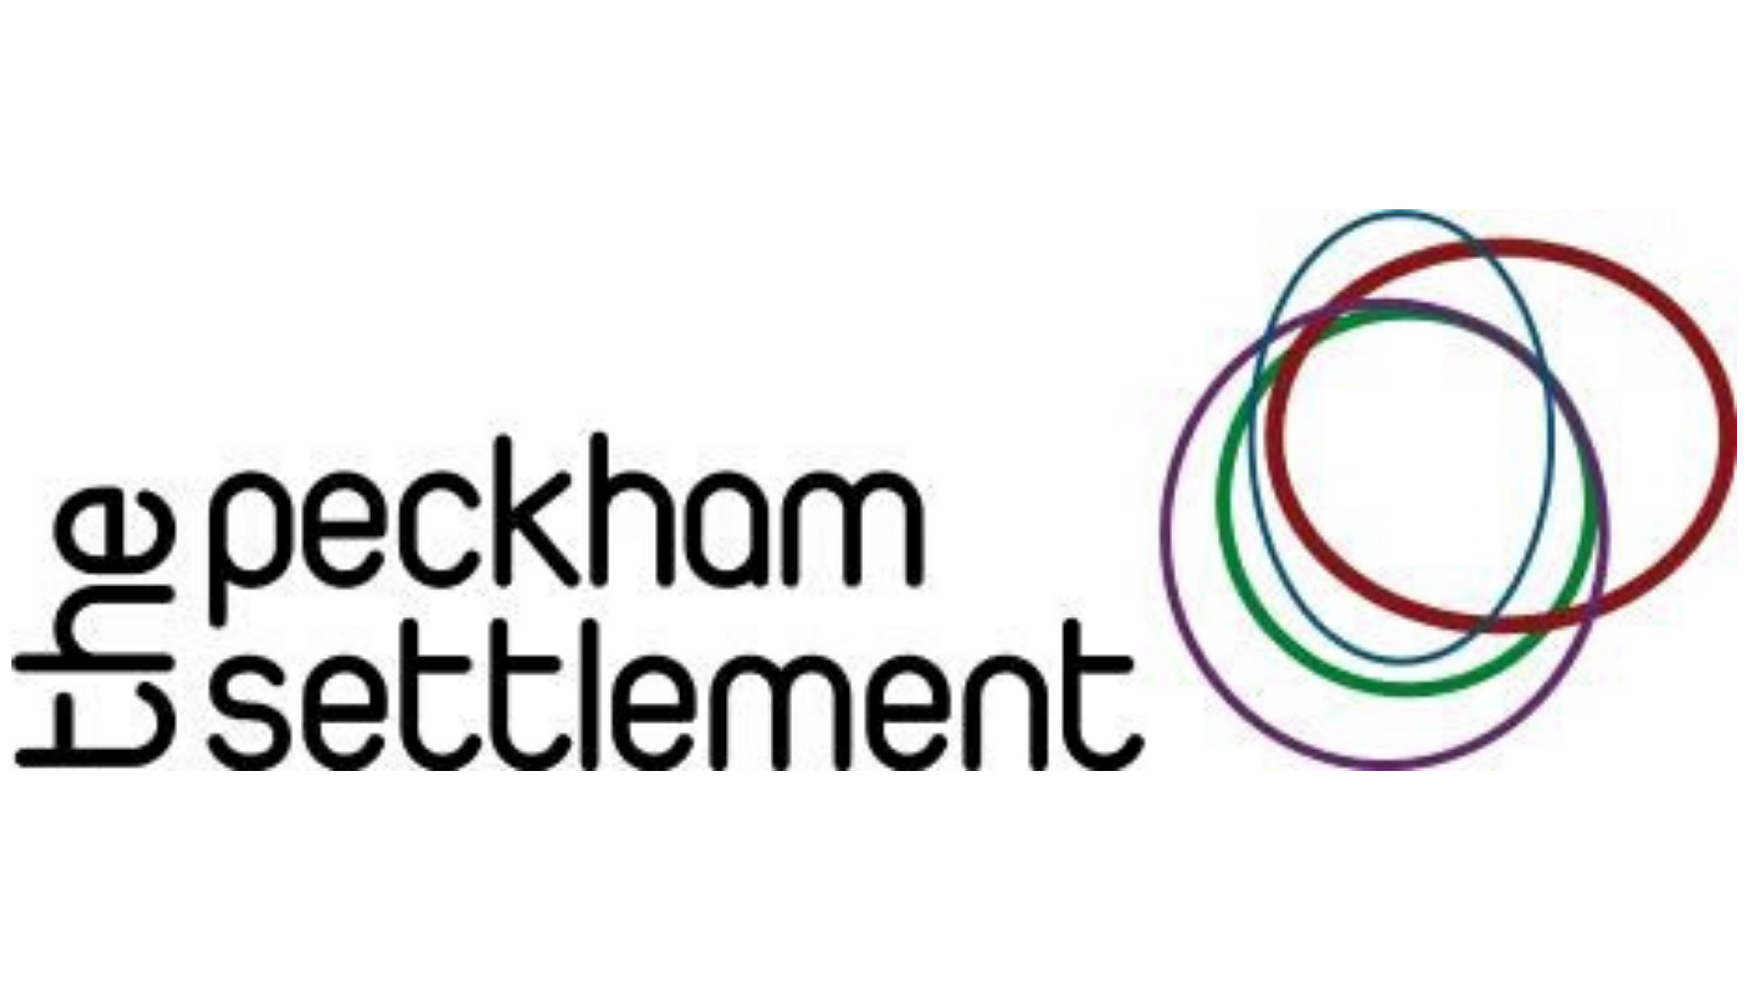 The Peckham Settlement